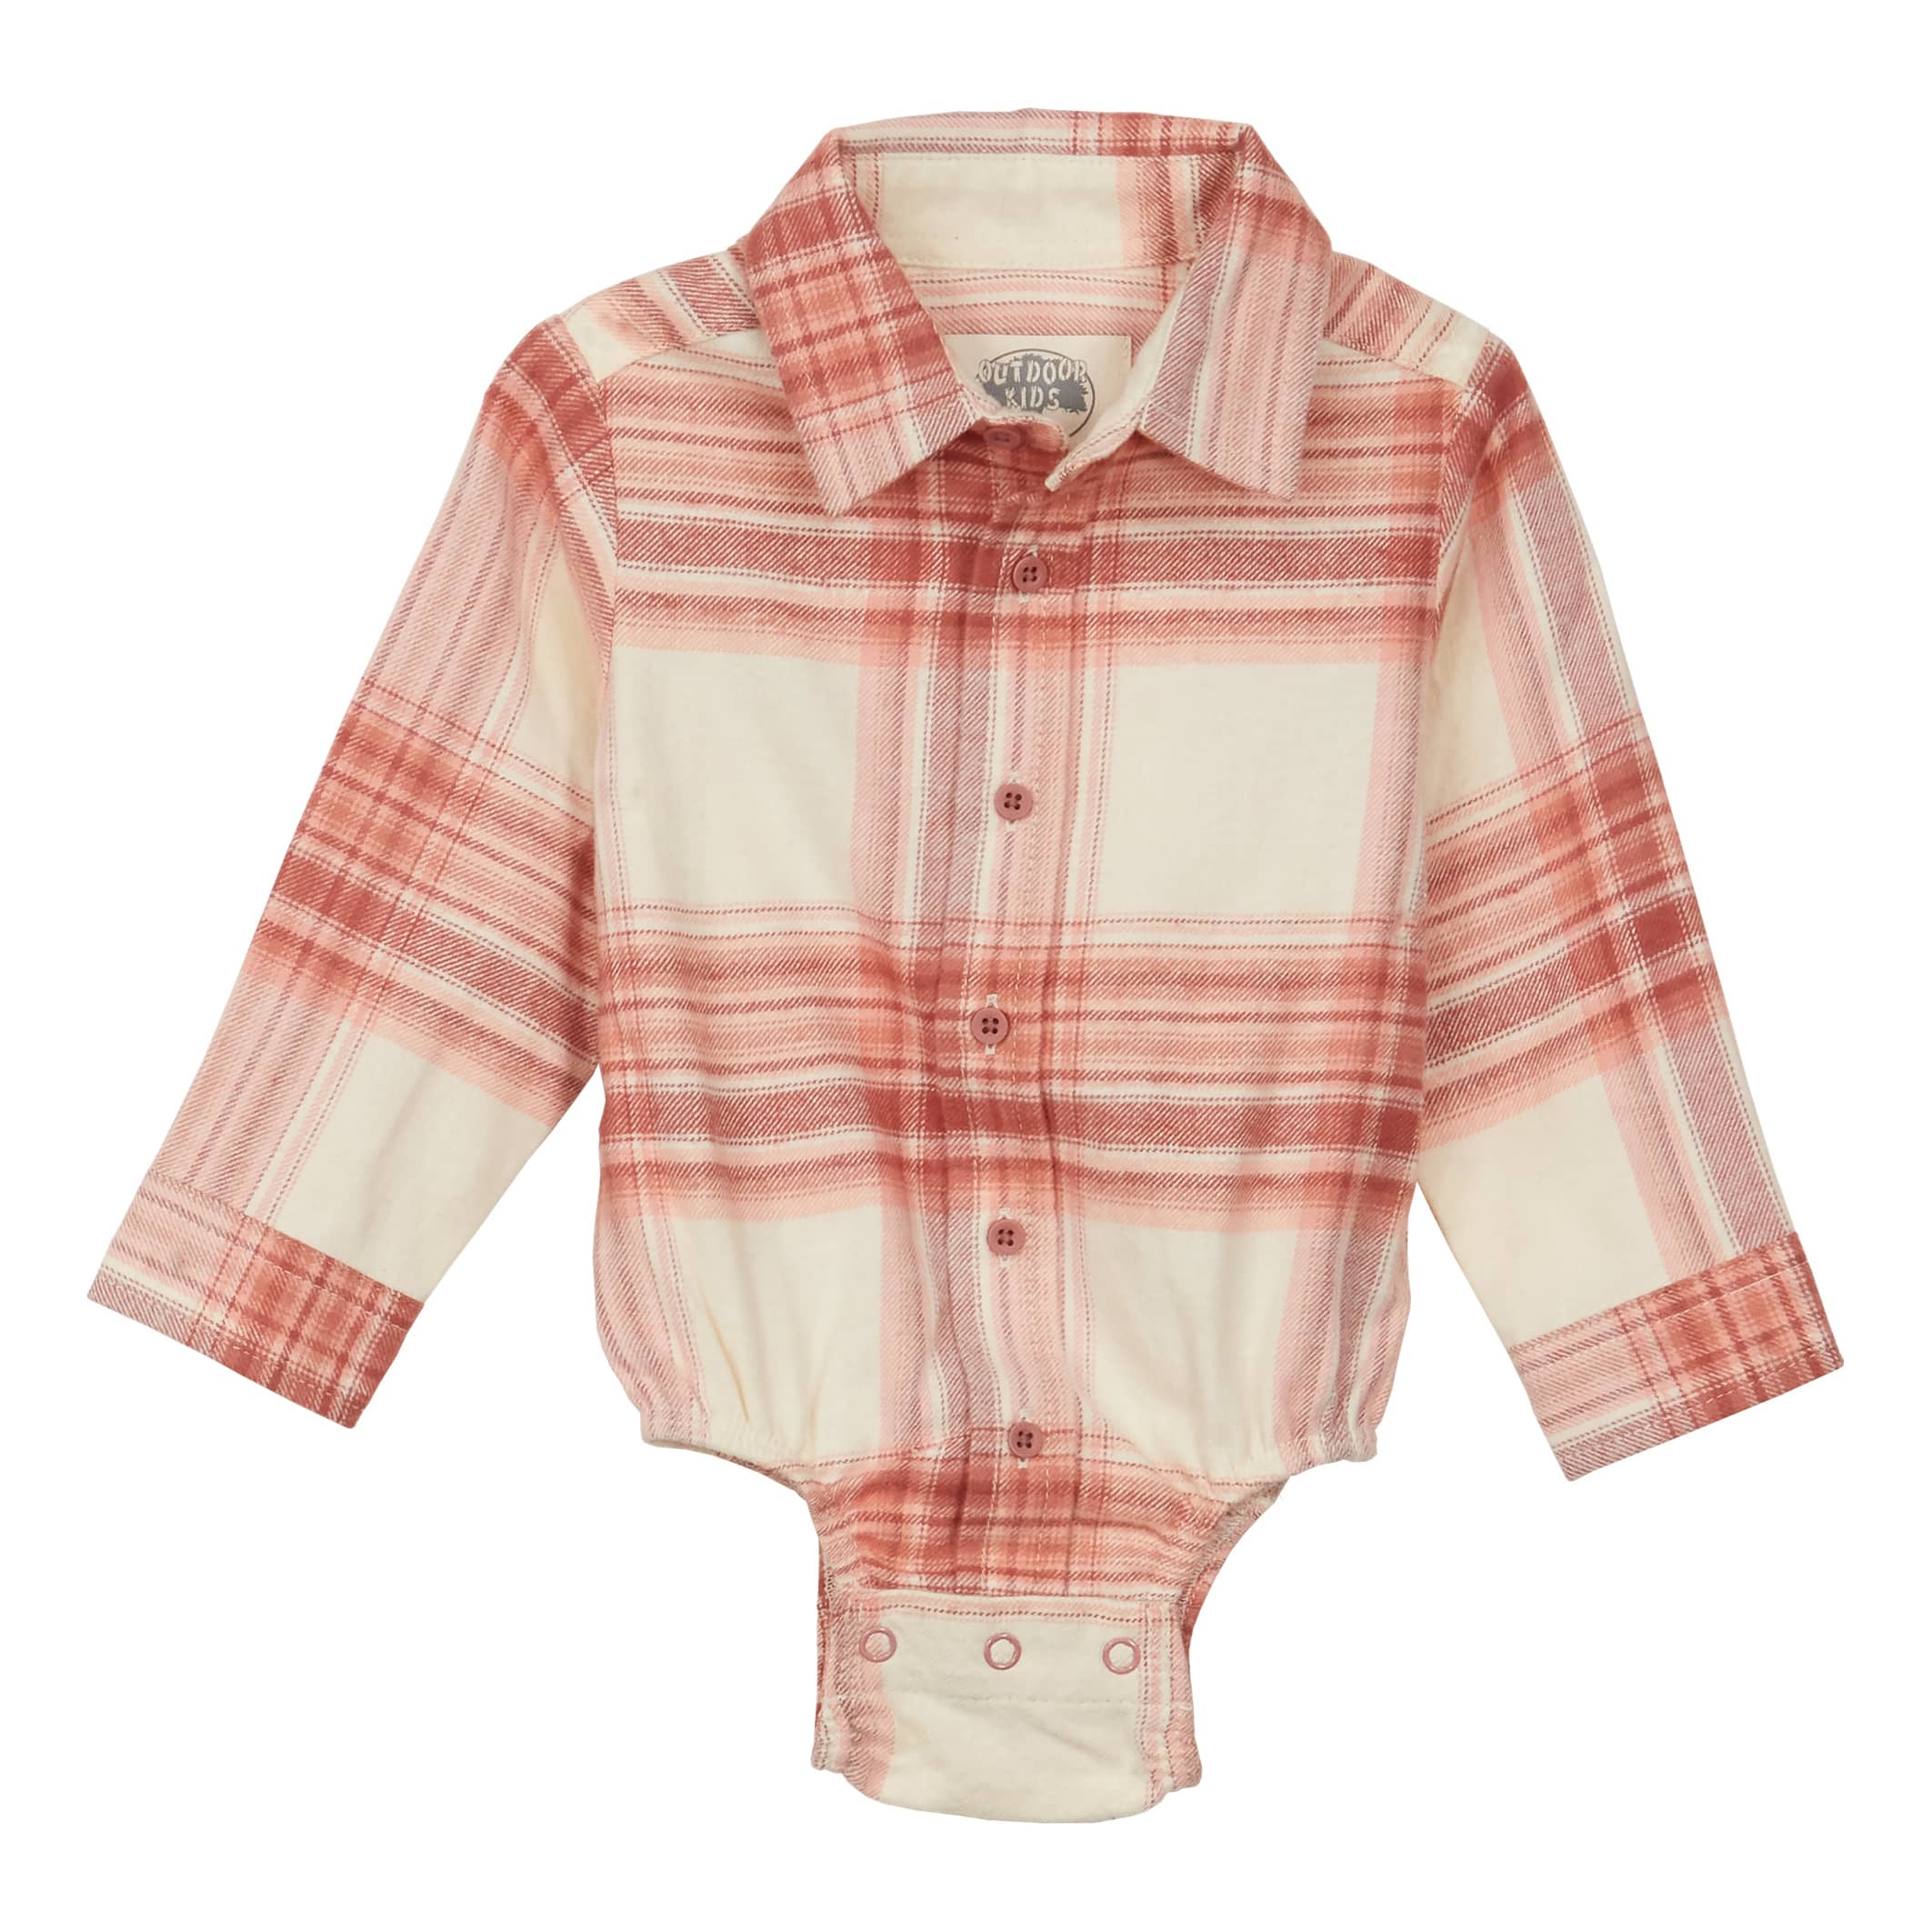 Bass Pro Shops® Infants’ Flannel Long-Sleeve Bodysuit - Cream Pink